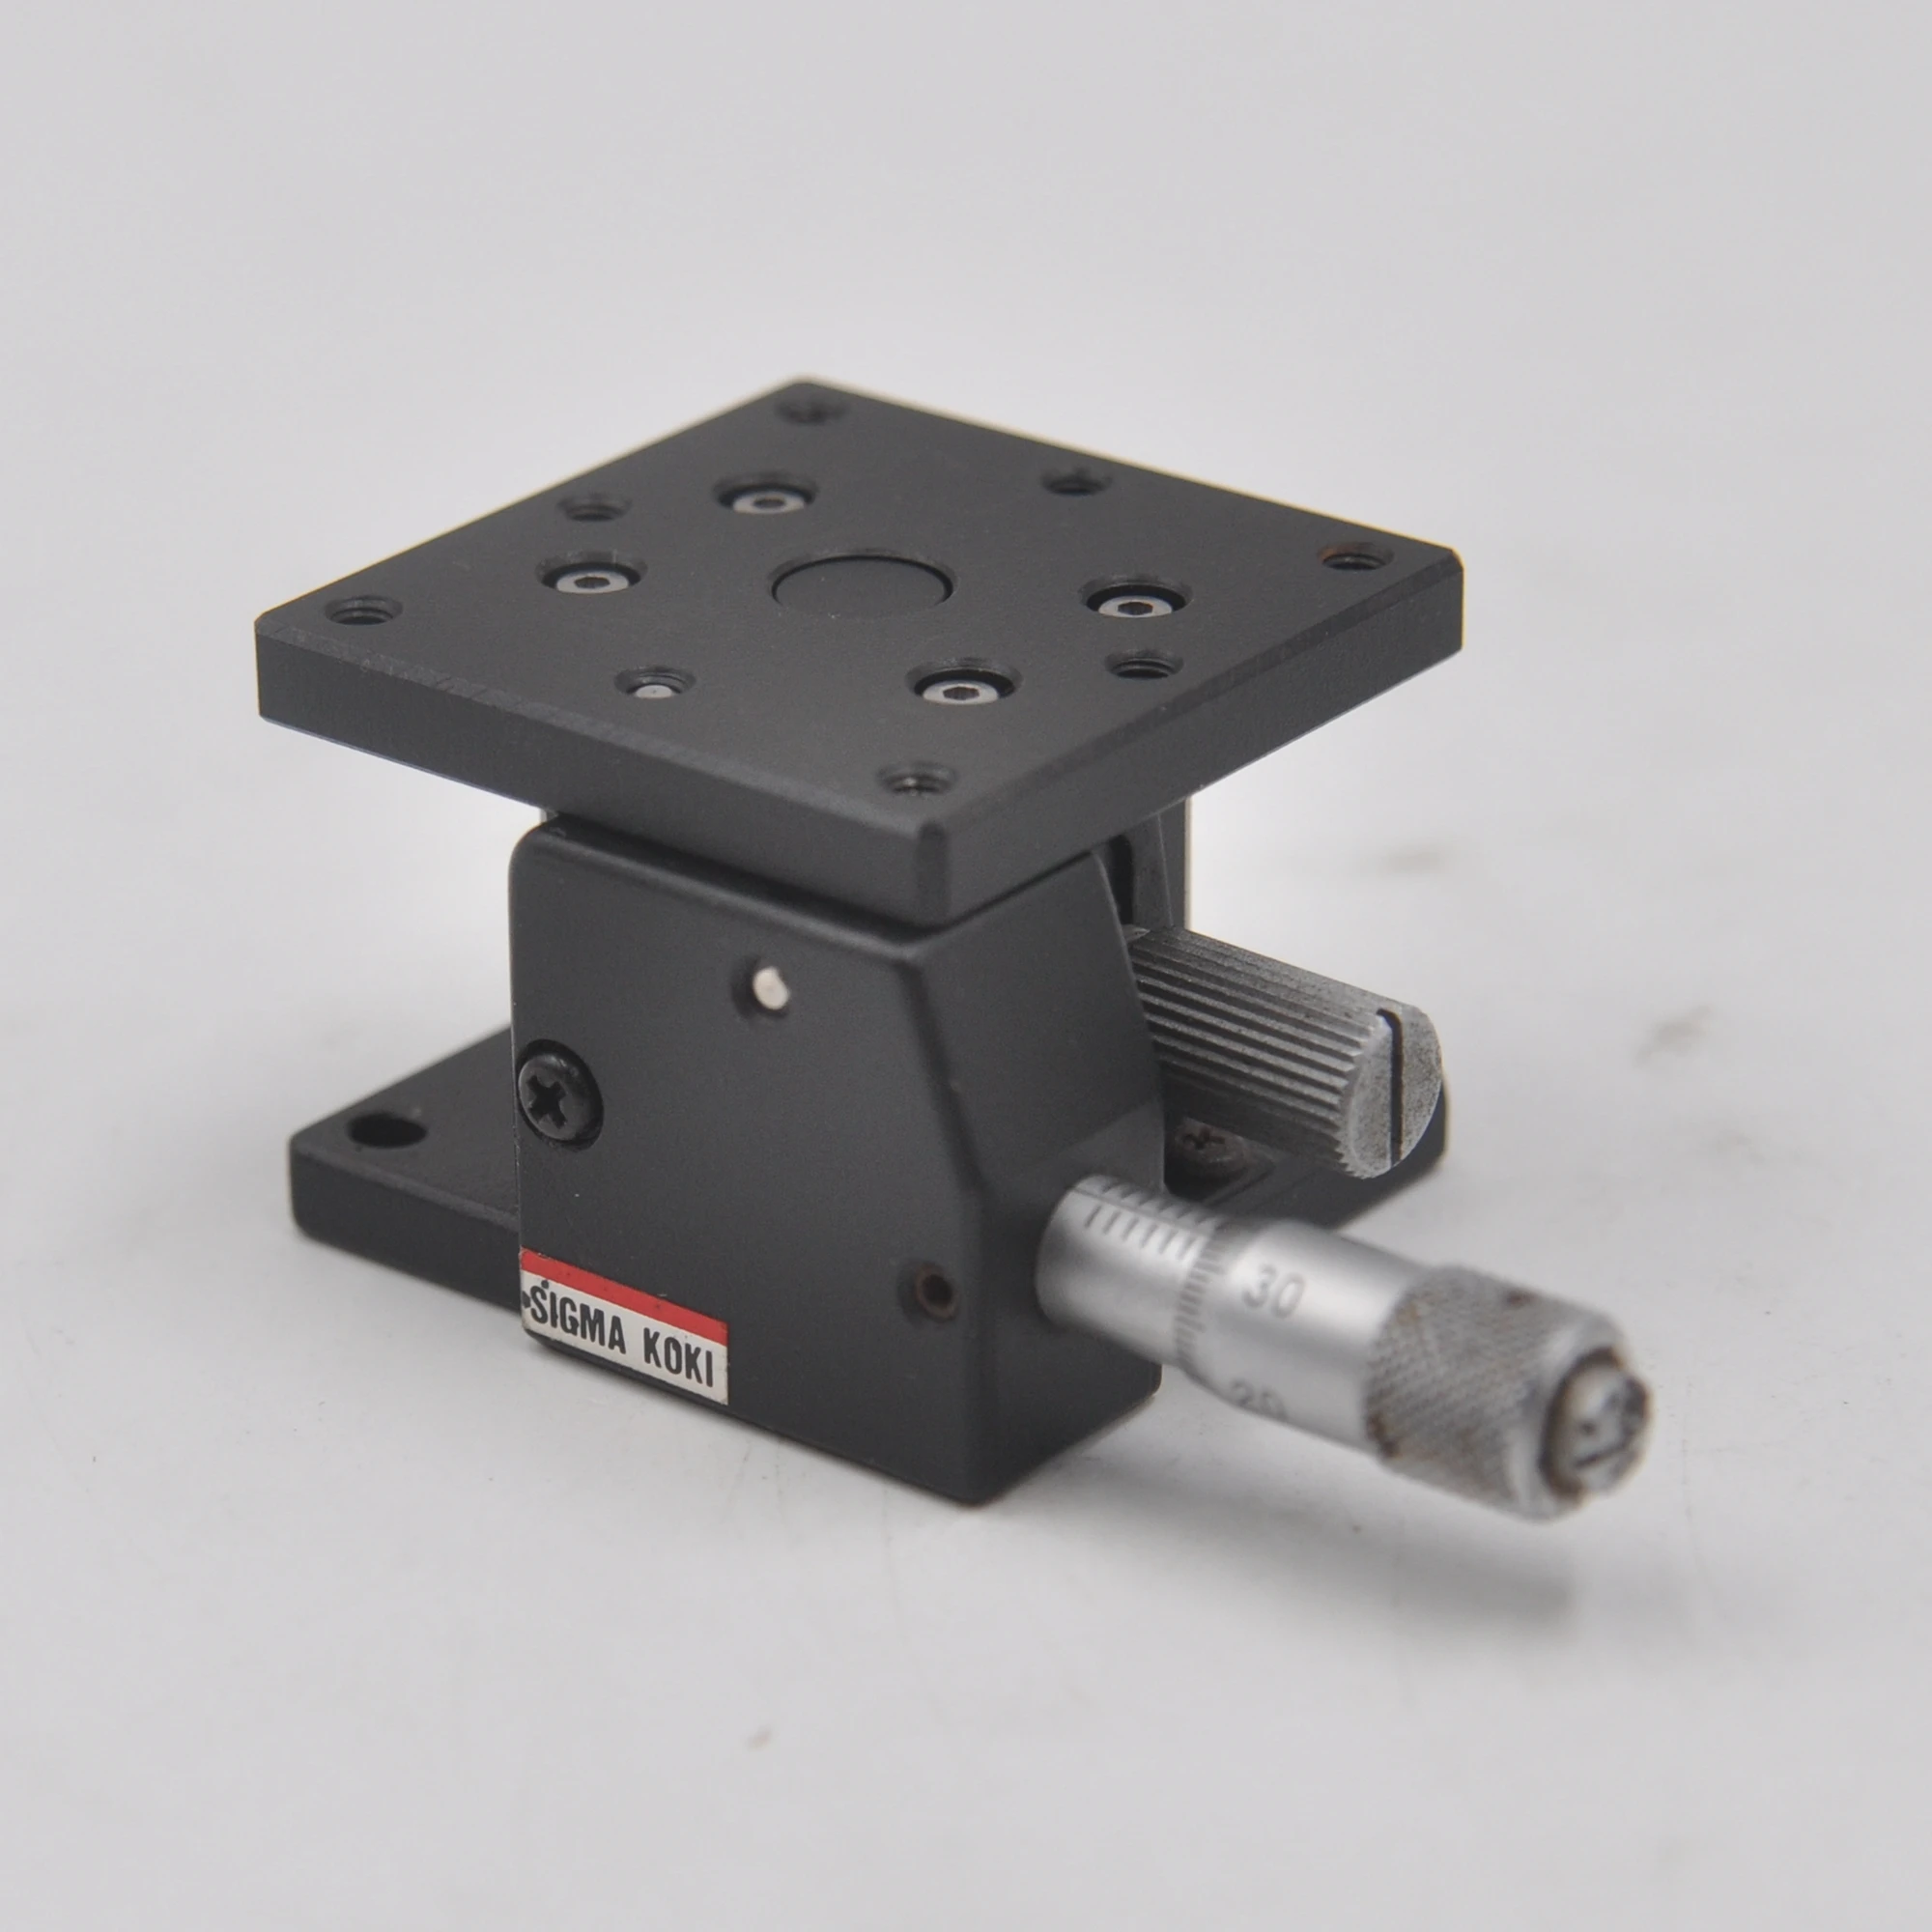 Z axis Sigma TSD-403 optical 40mm manual high precision fine adjustment displacement slide adjustable lifting platform copper